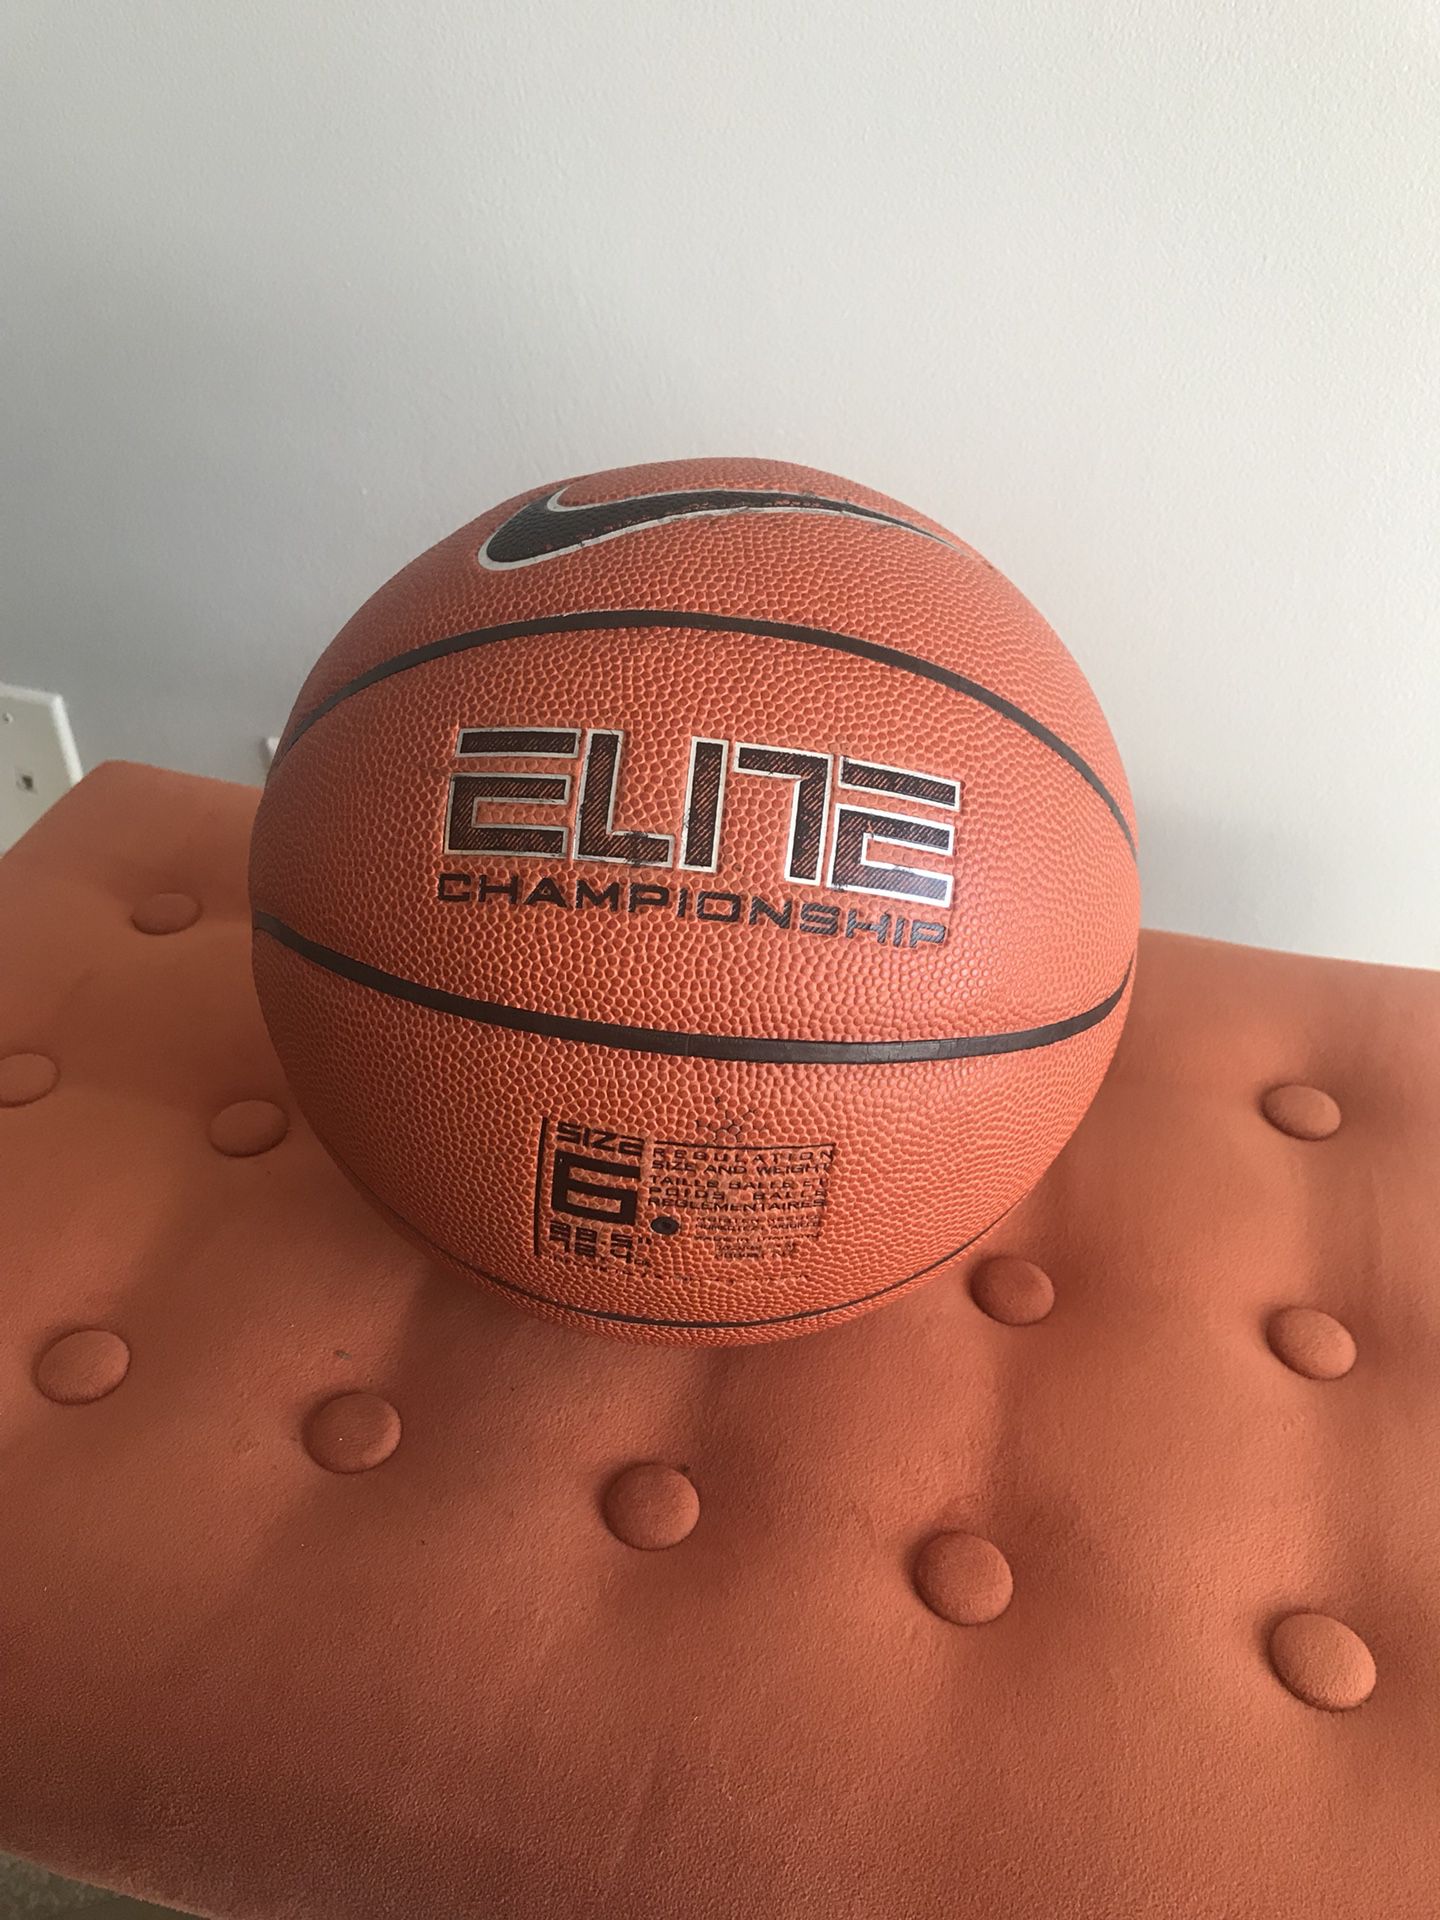 Nike Elite Championship Basketball